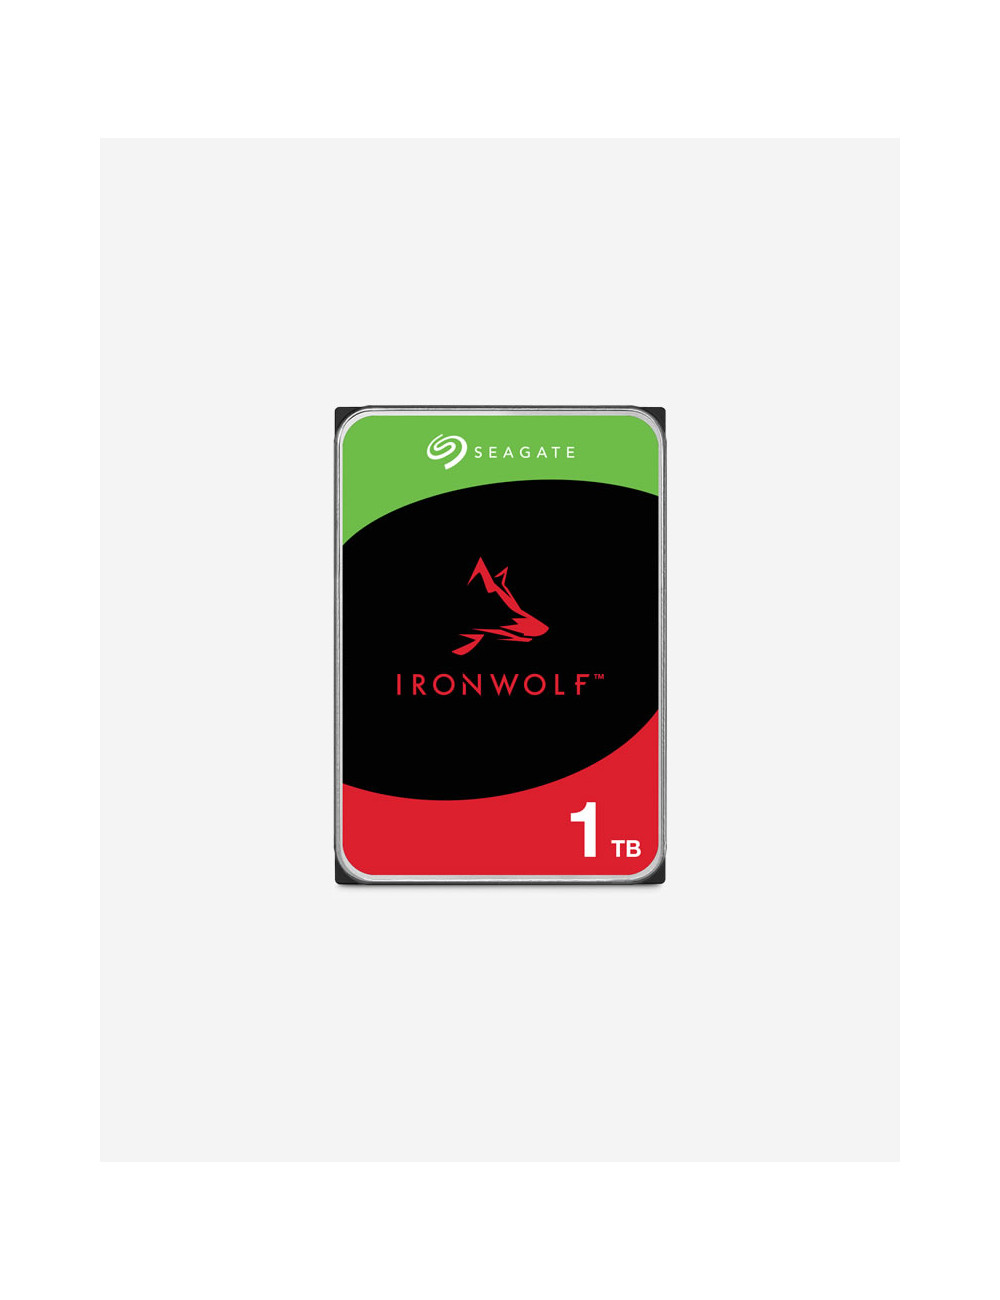 Seagate IRONWOLF 1TB HDD 3.5"